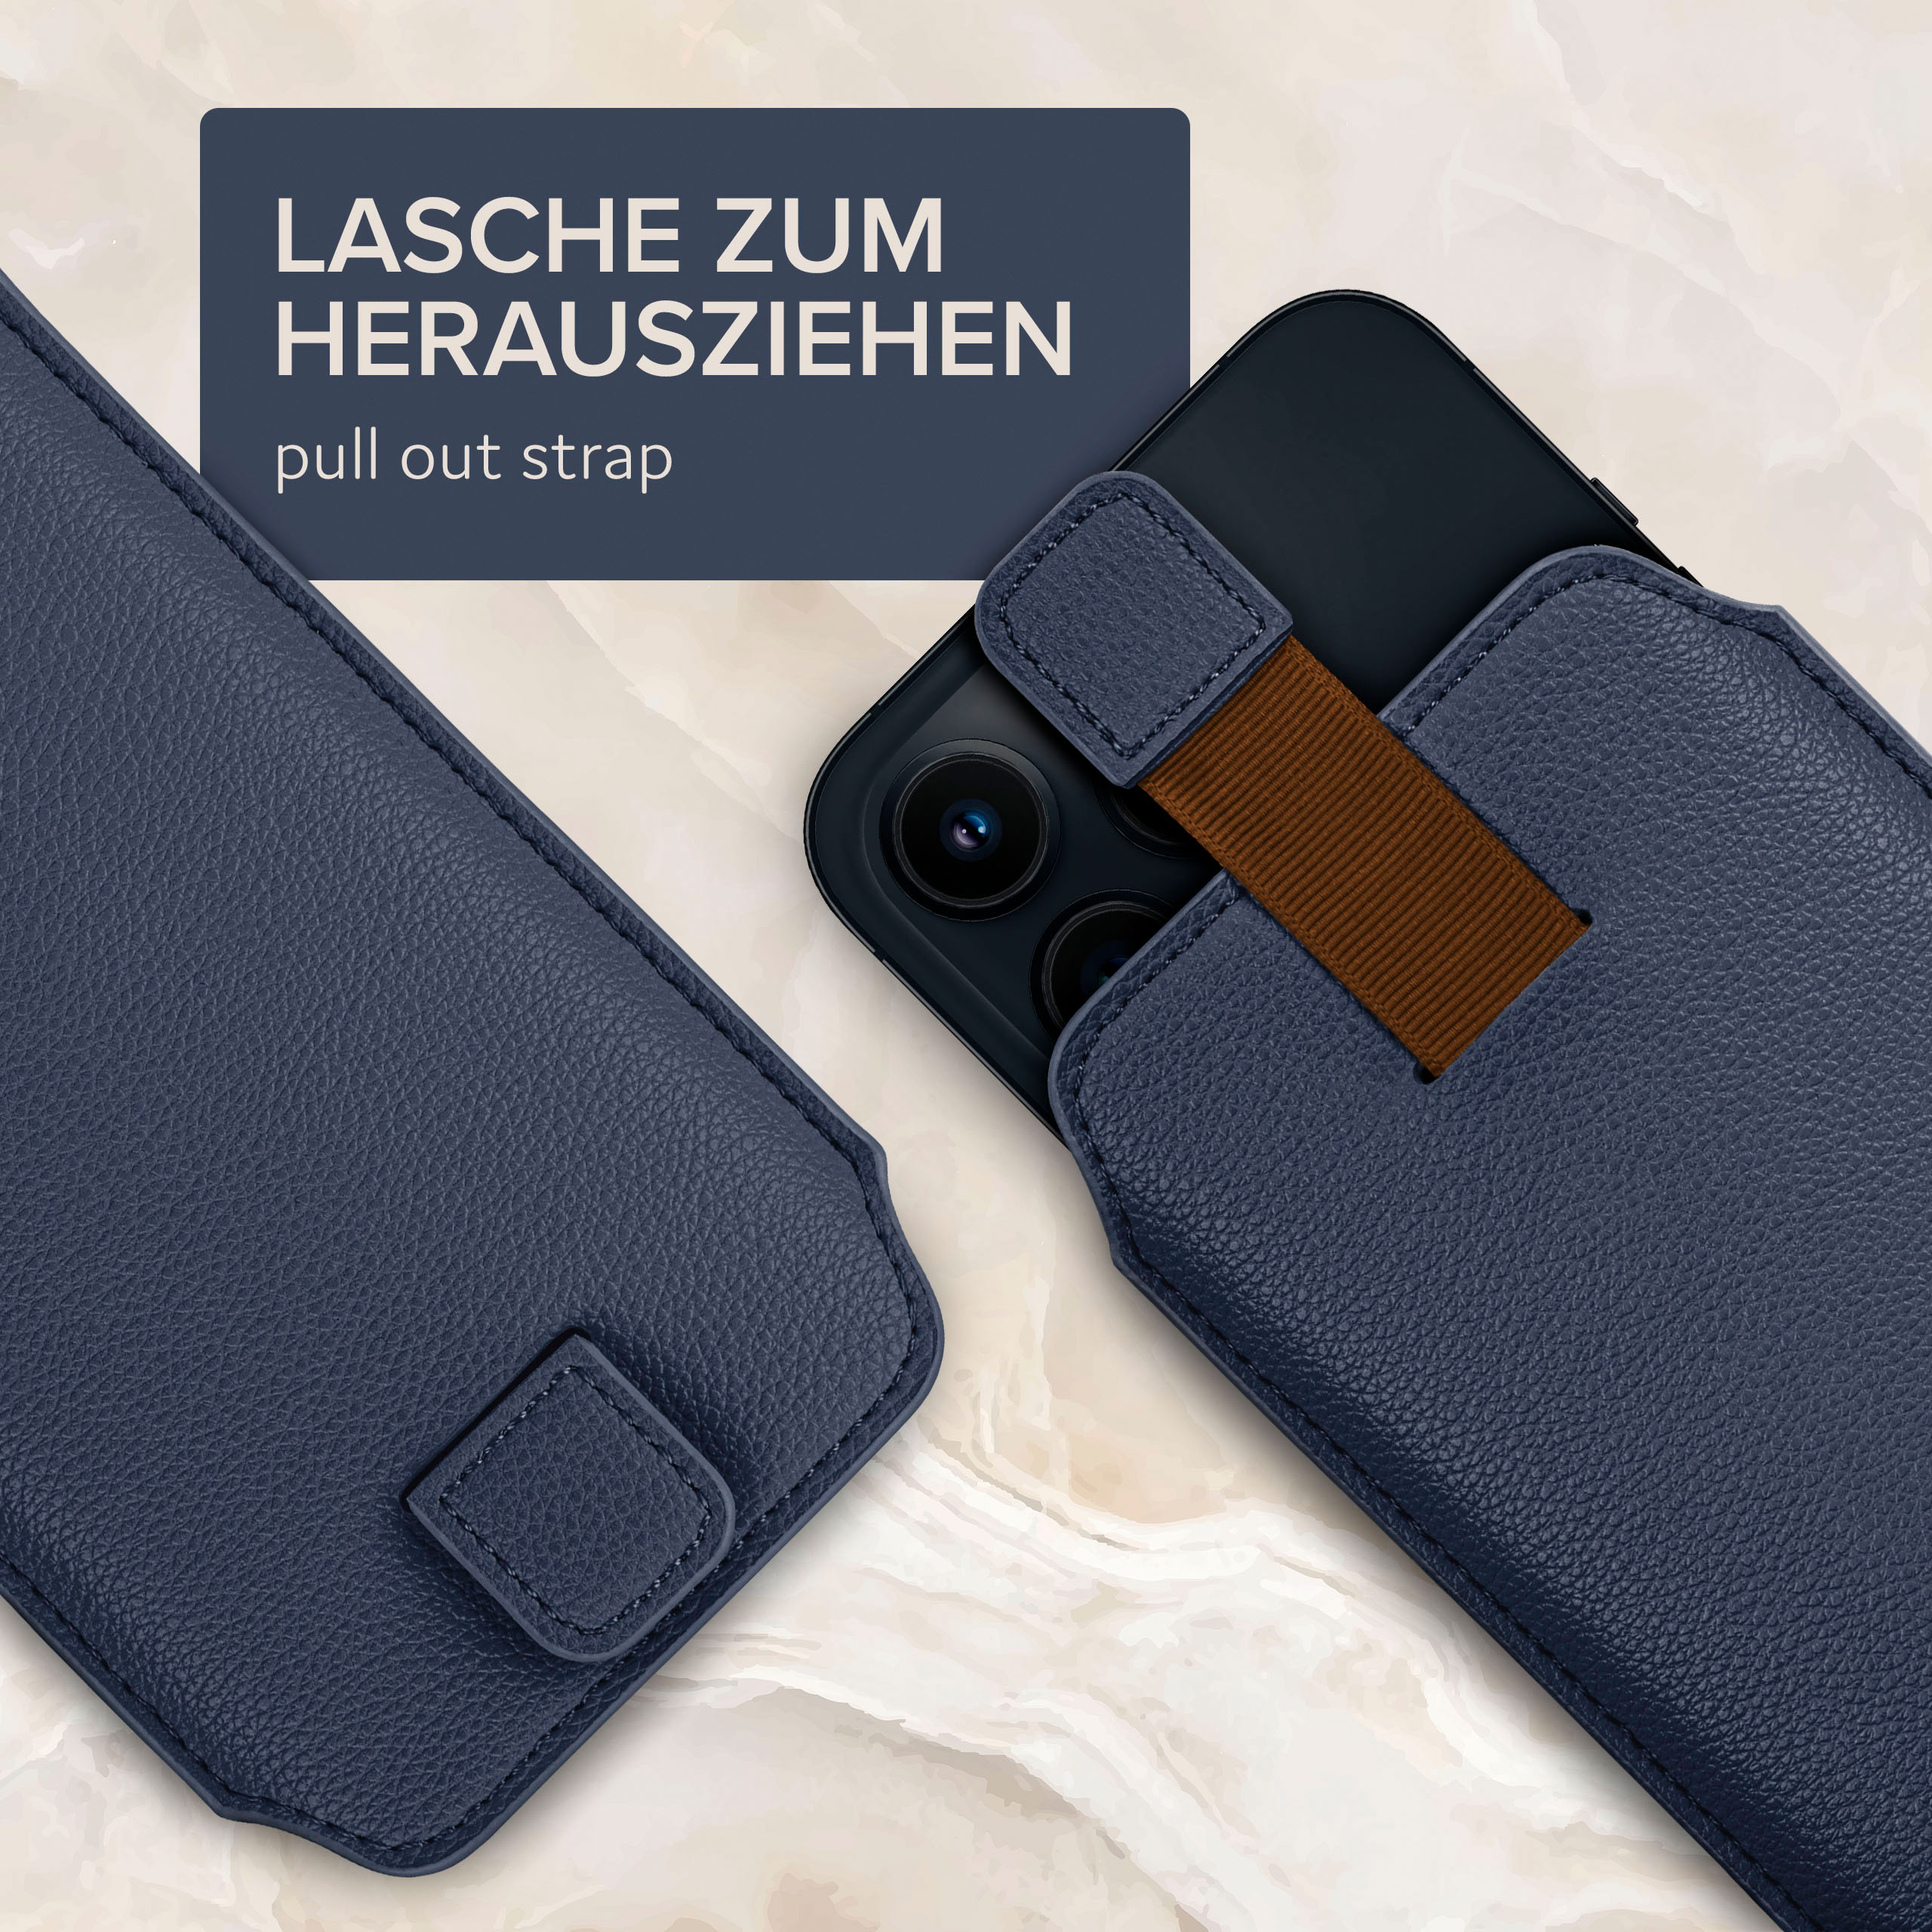 Compact, Xperia Einsteckhülle X Full ONEFLOW Cover, Zuglasche, mit Dunkelblau Sony,